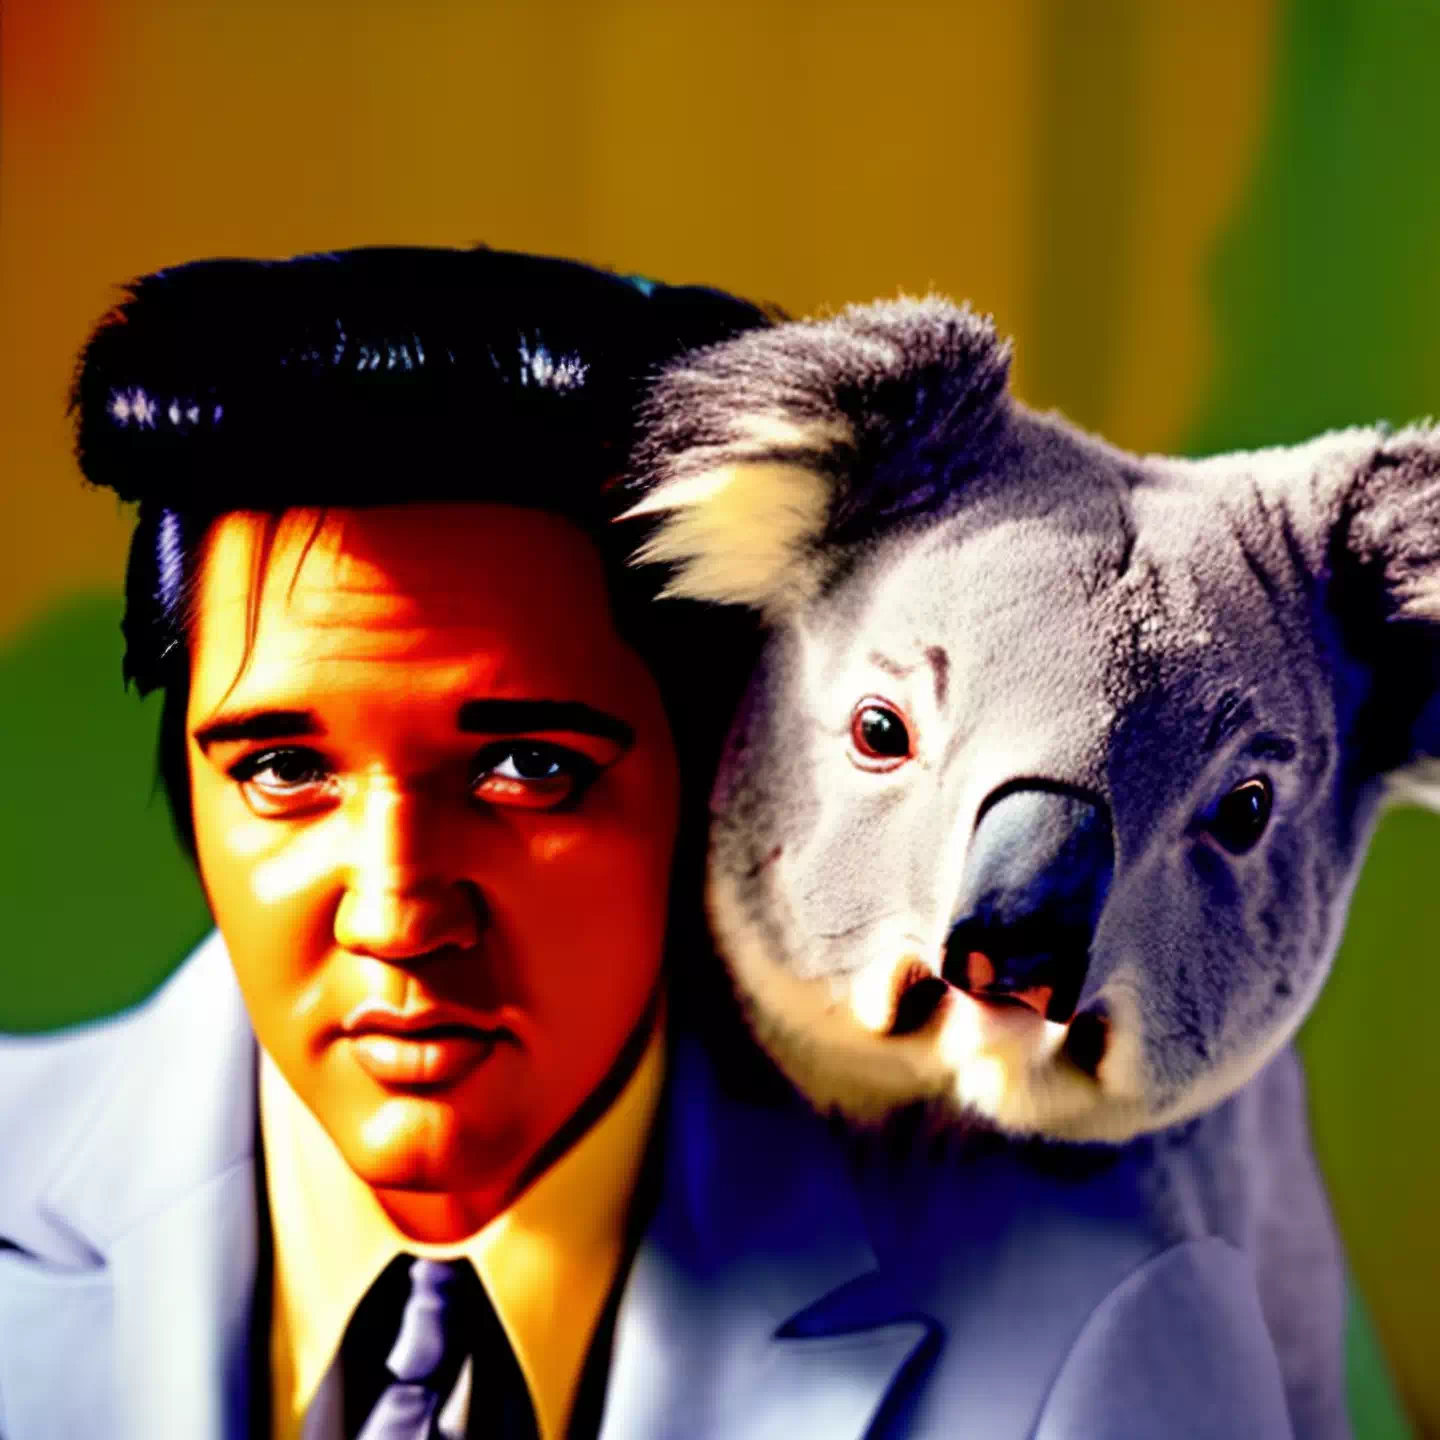 Elvis with a koala